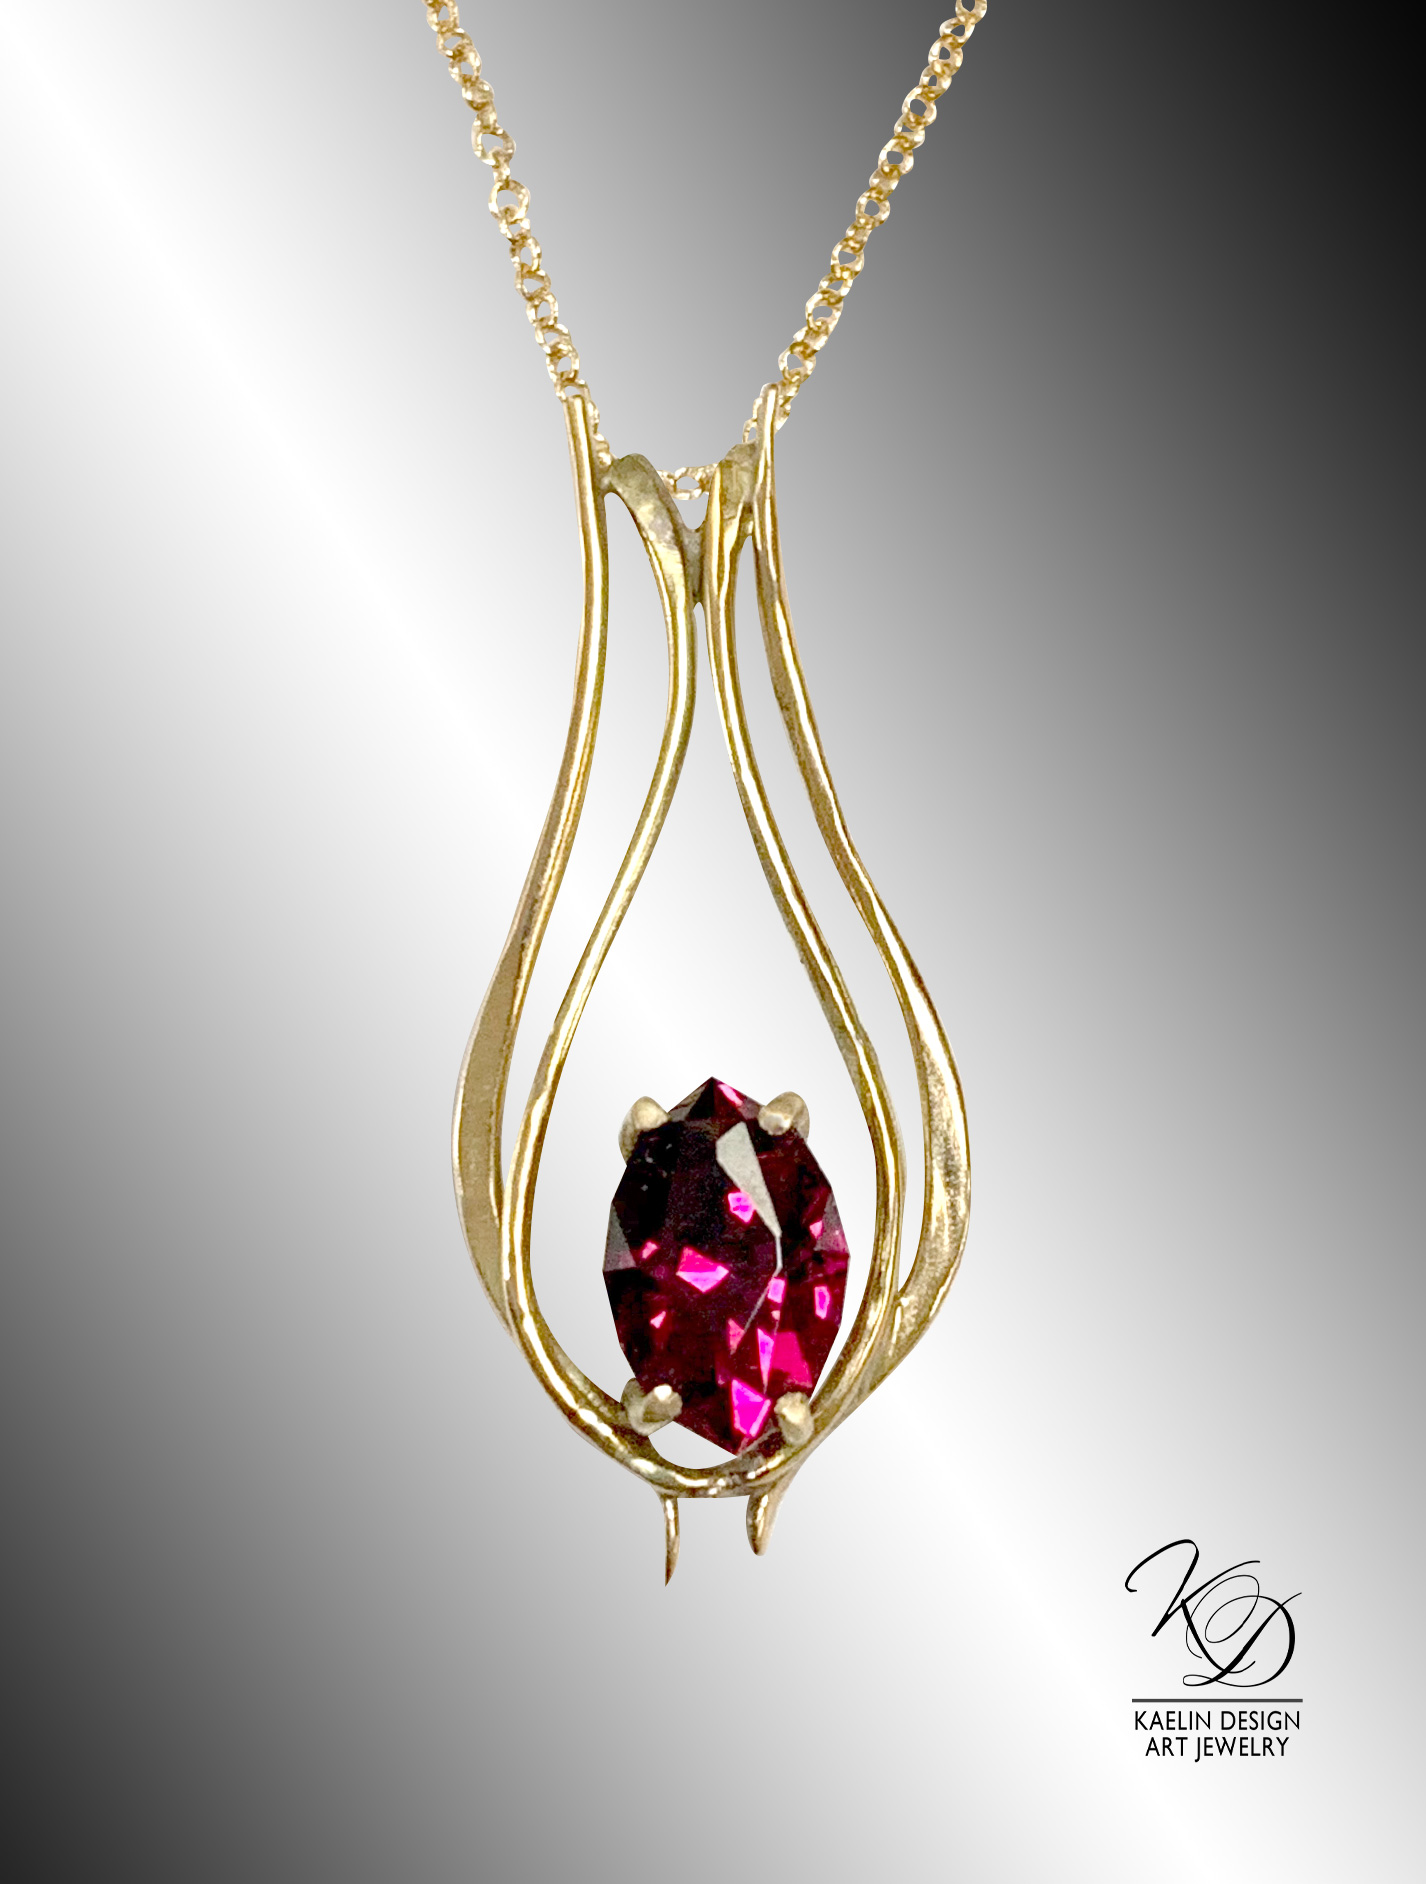 Firelight Gold Art Pendant with Rhodolite Garnet by Kaelin Design Fine Art Jewelry